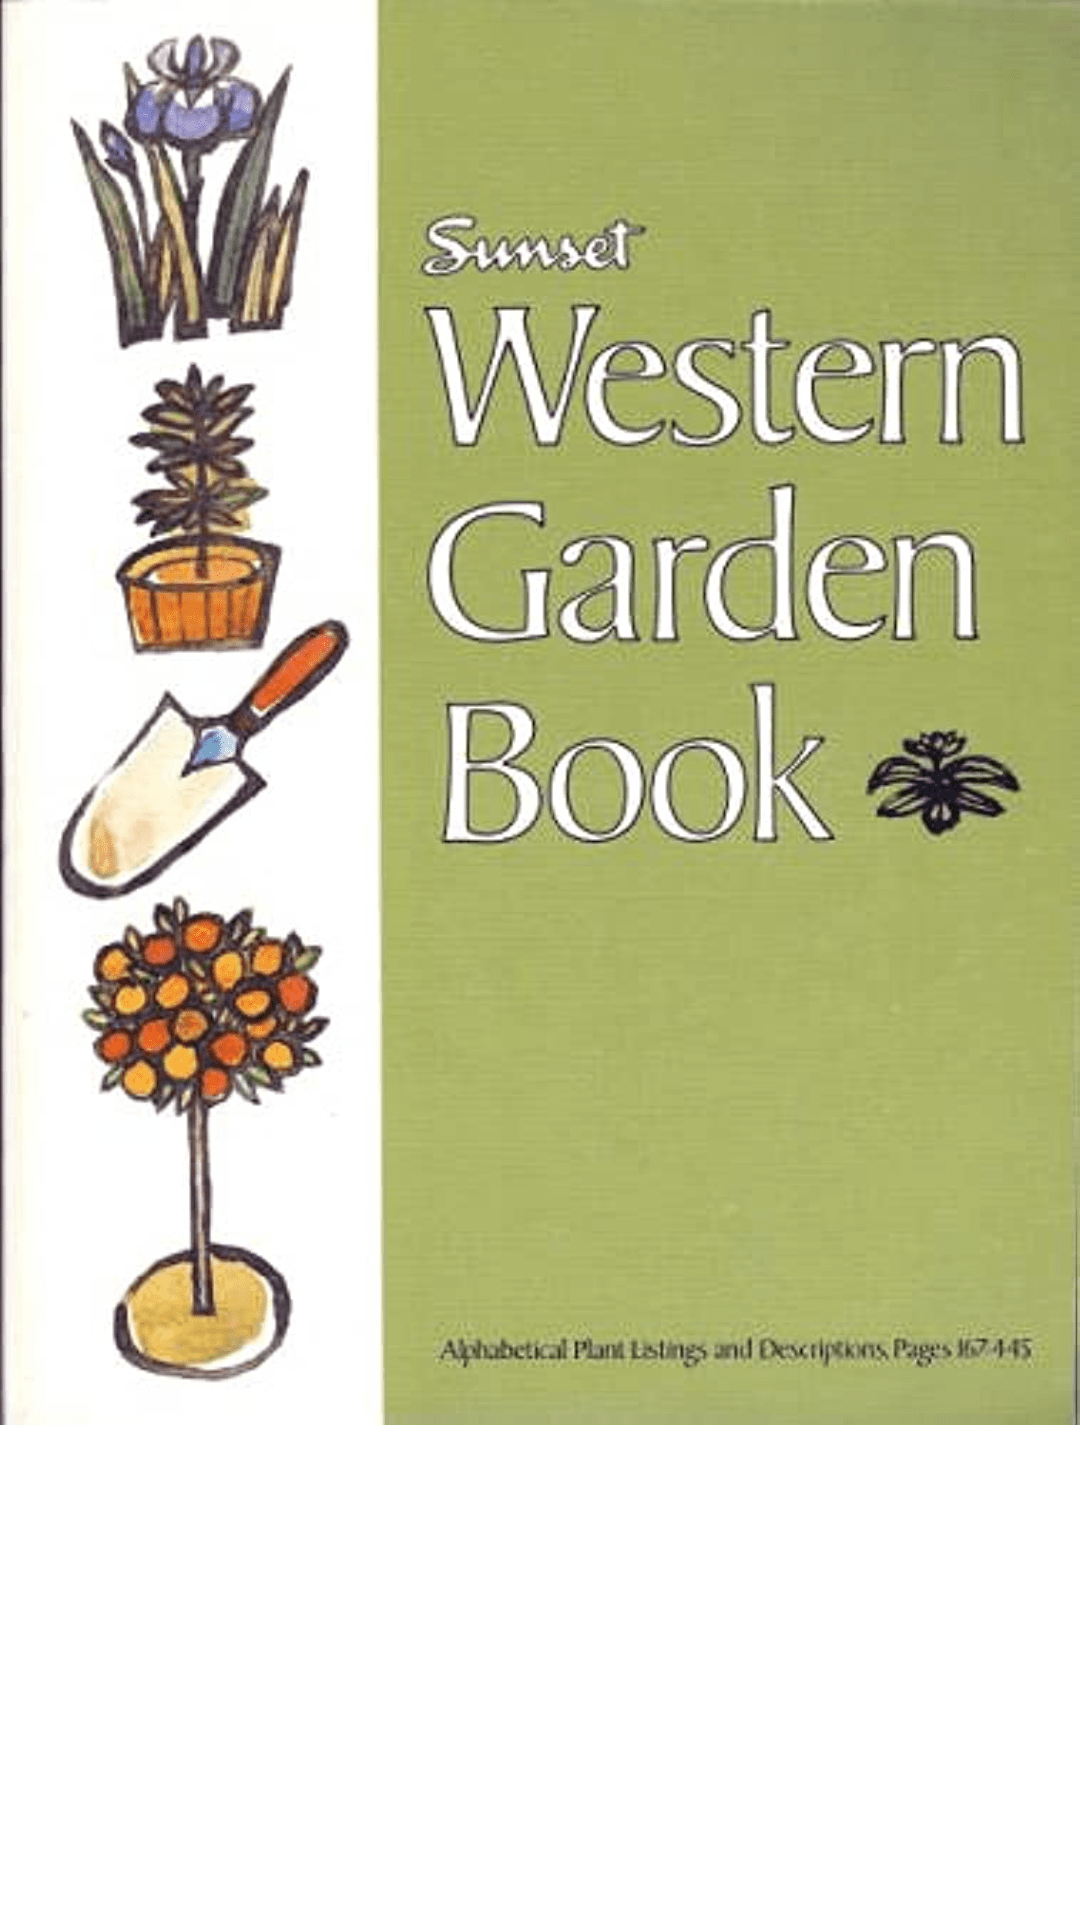 Western Garden Book by Sunset Books